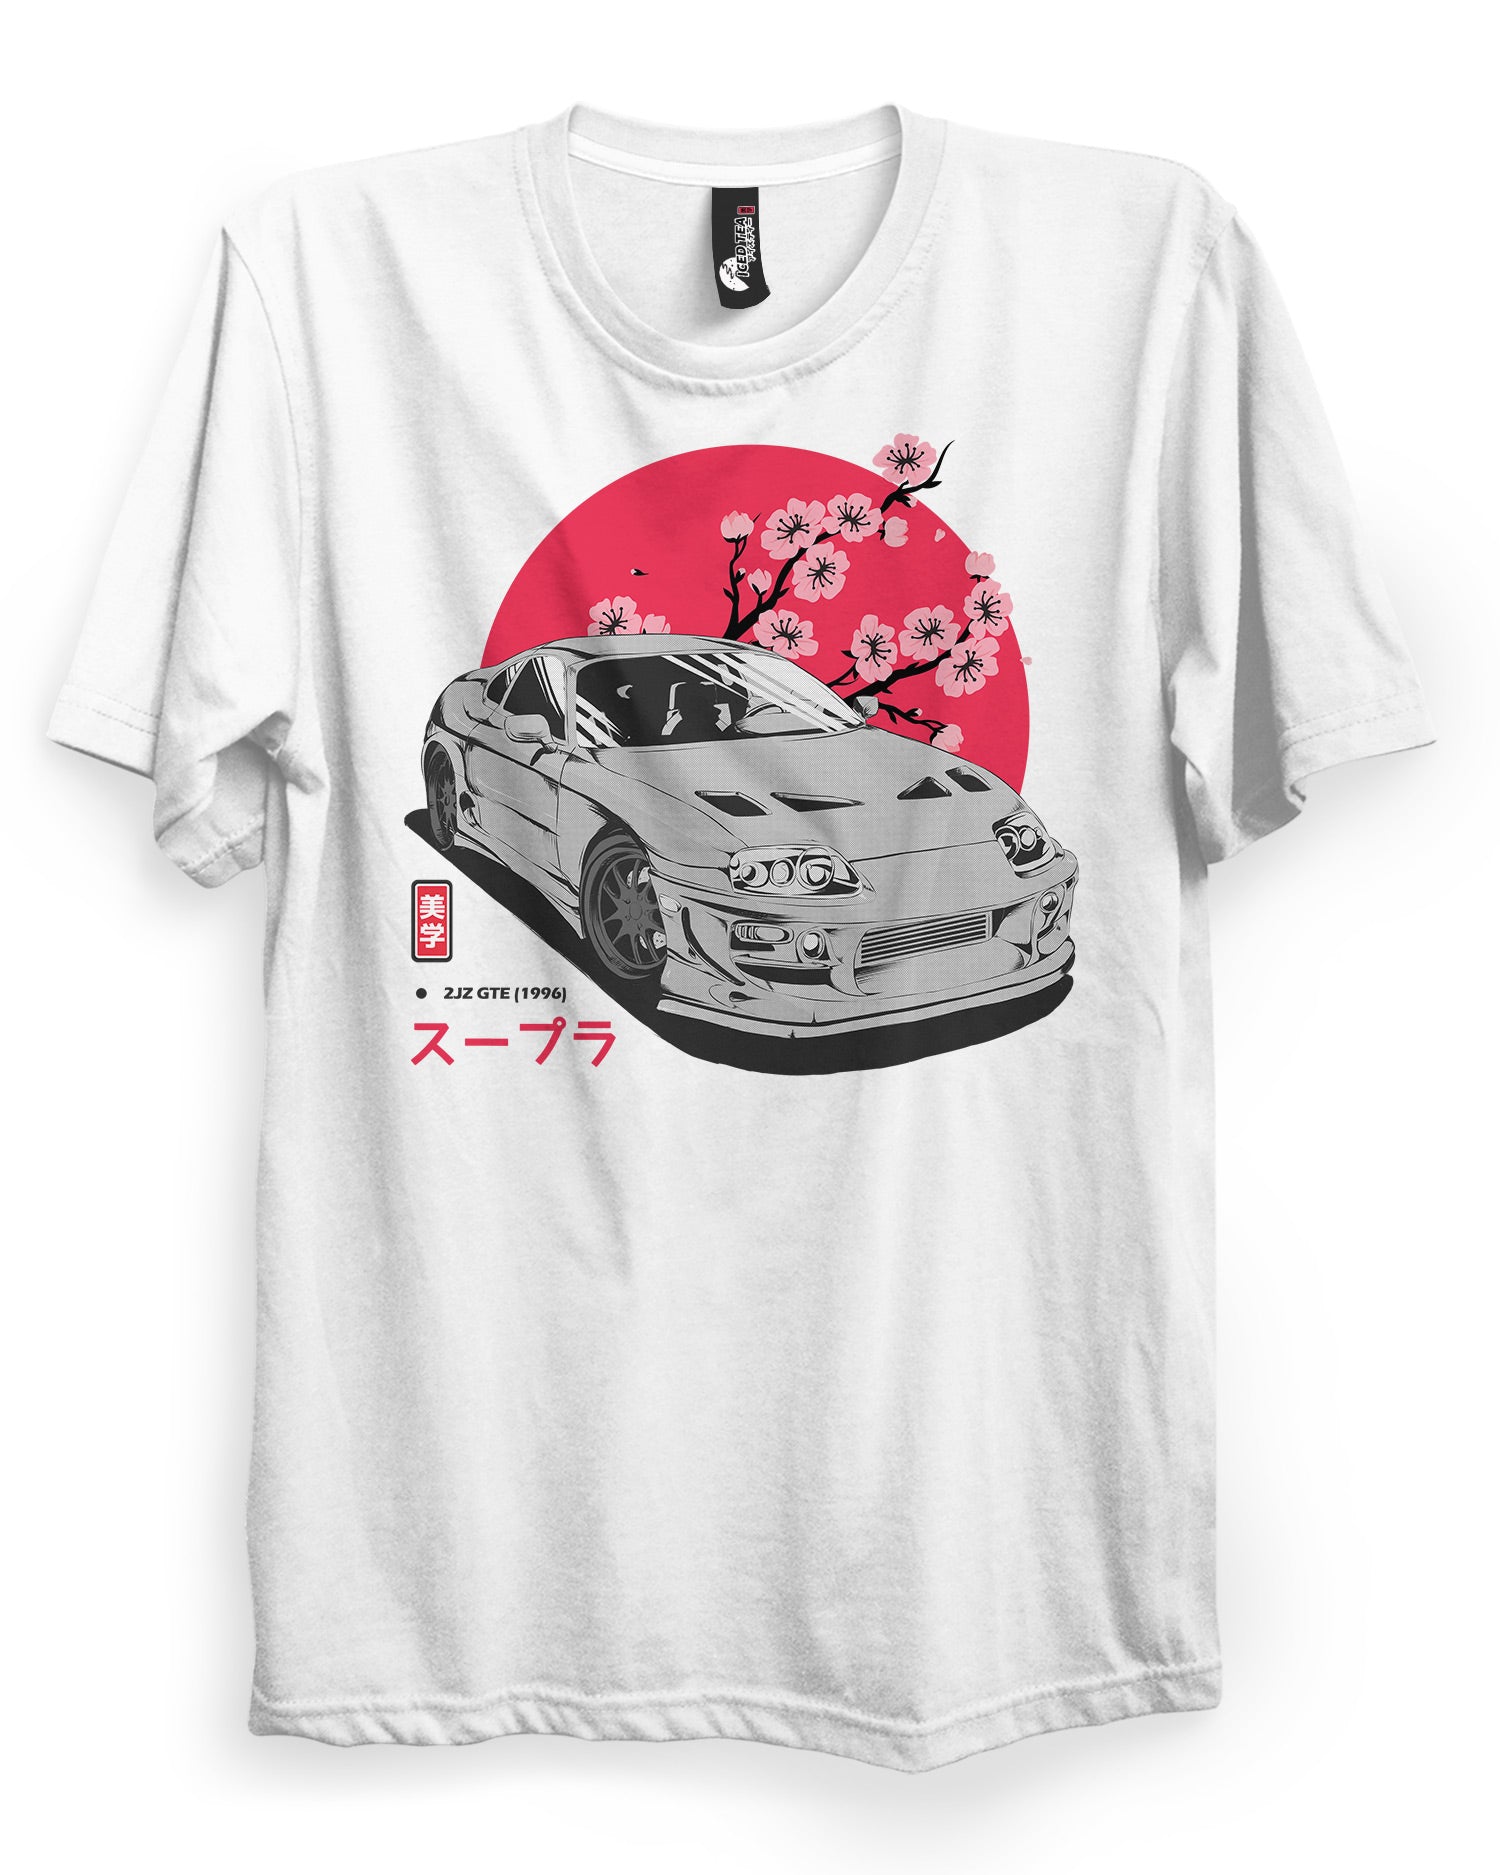 SUPRA (スープラ) - Aesthetic T-Shirt - Dark Aesthetics and Anime Clothing Streetwear